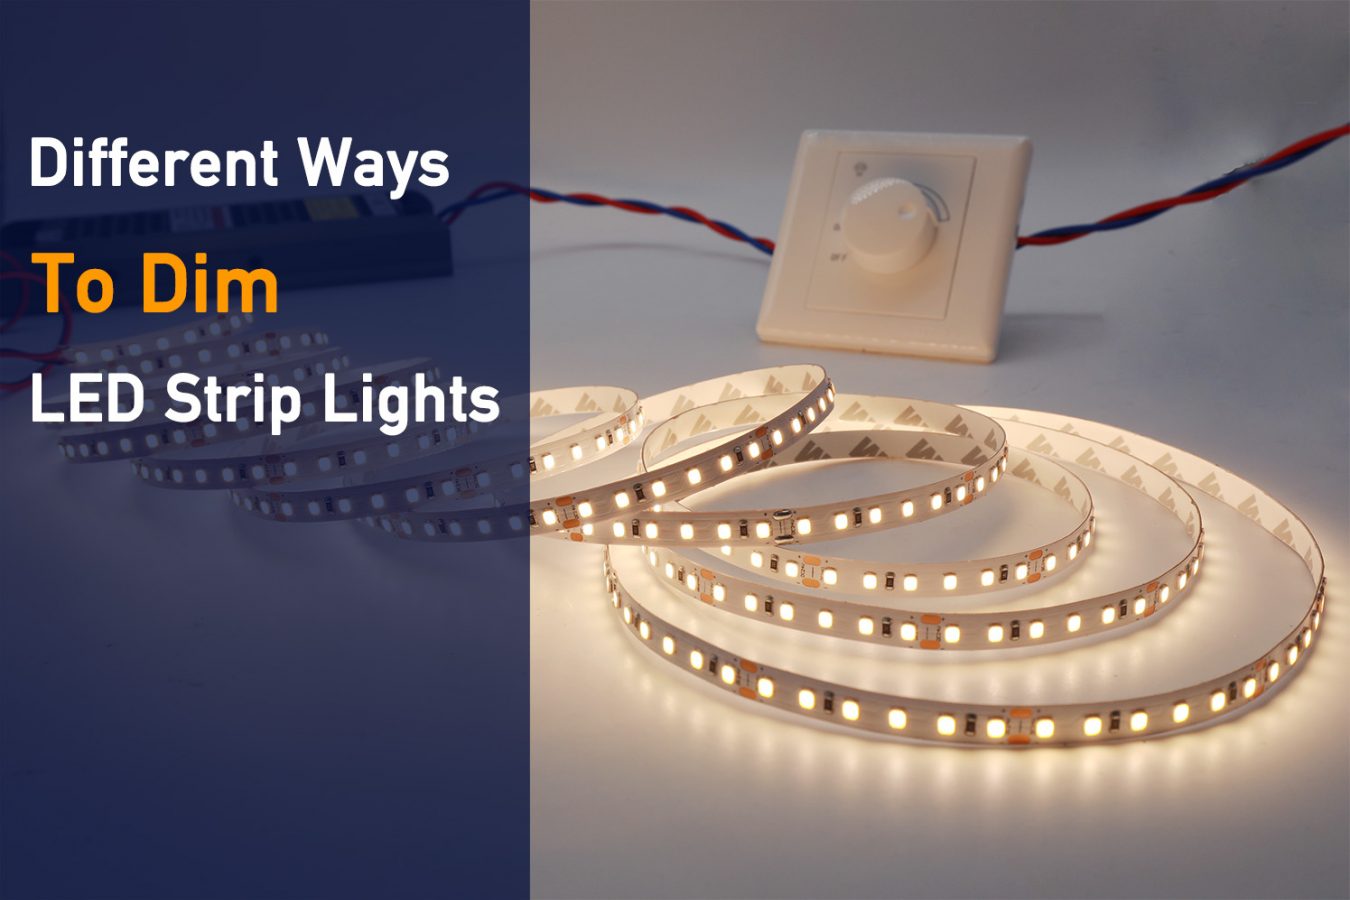 Different Ways To Dim LED Strip Lights E1640075384150 